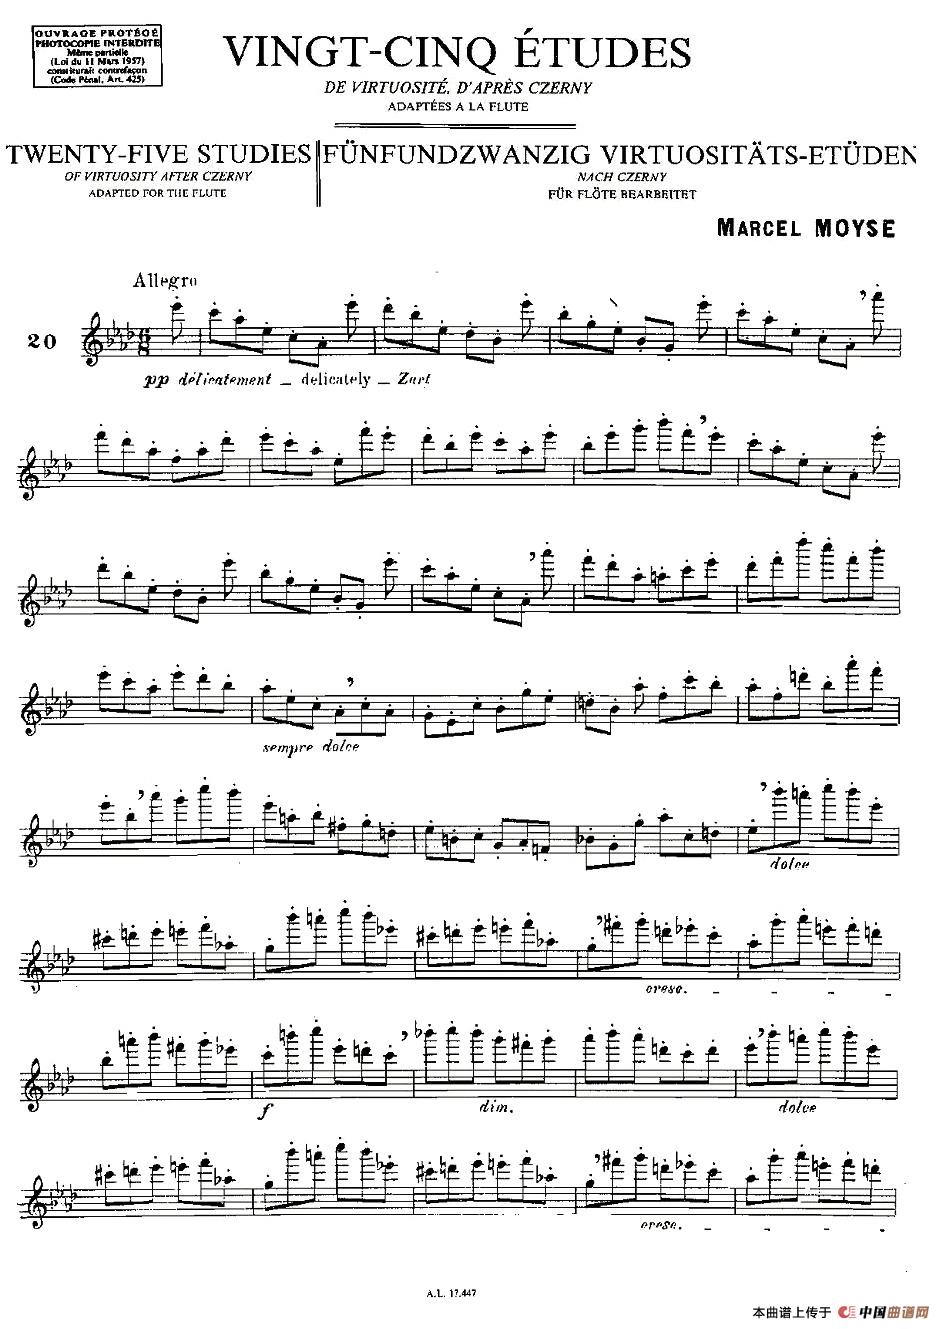 Moyse - 25 Studies after Czerny flute 之20（25首改编自车